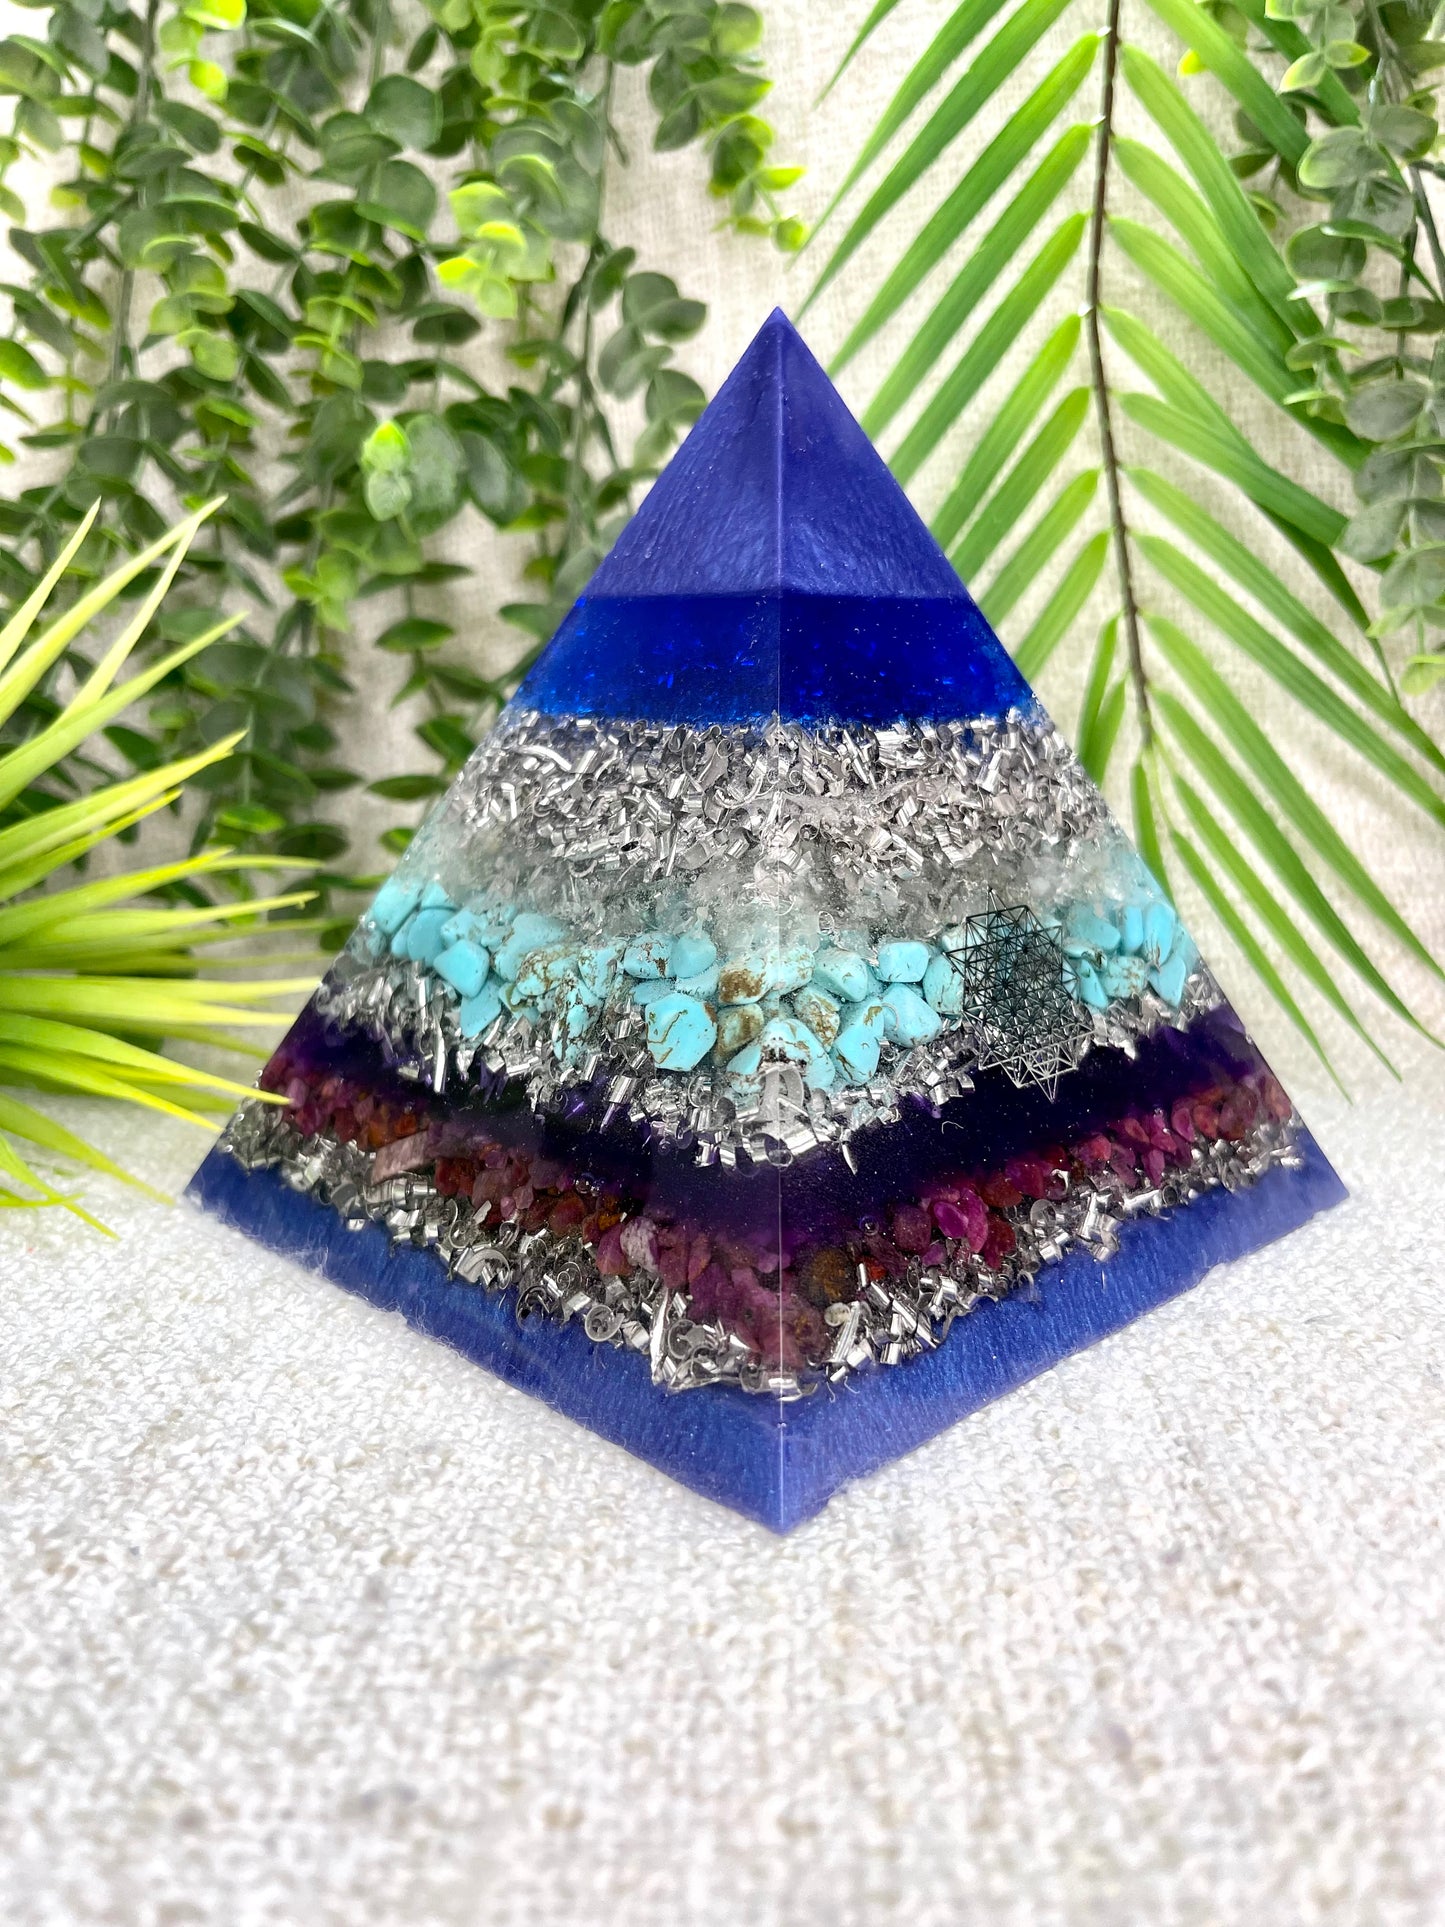 SAGITTARIUS - Astrology Edition - Orgonite Pyramid - EMF Protector - Clear Quartz, Turquoise, Ruby with Aluminum Metal